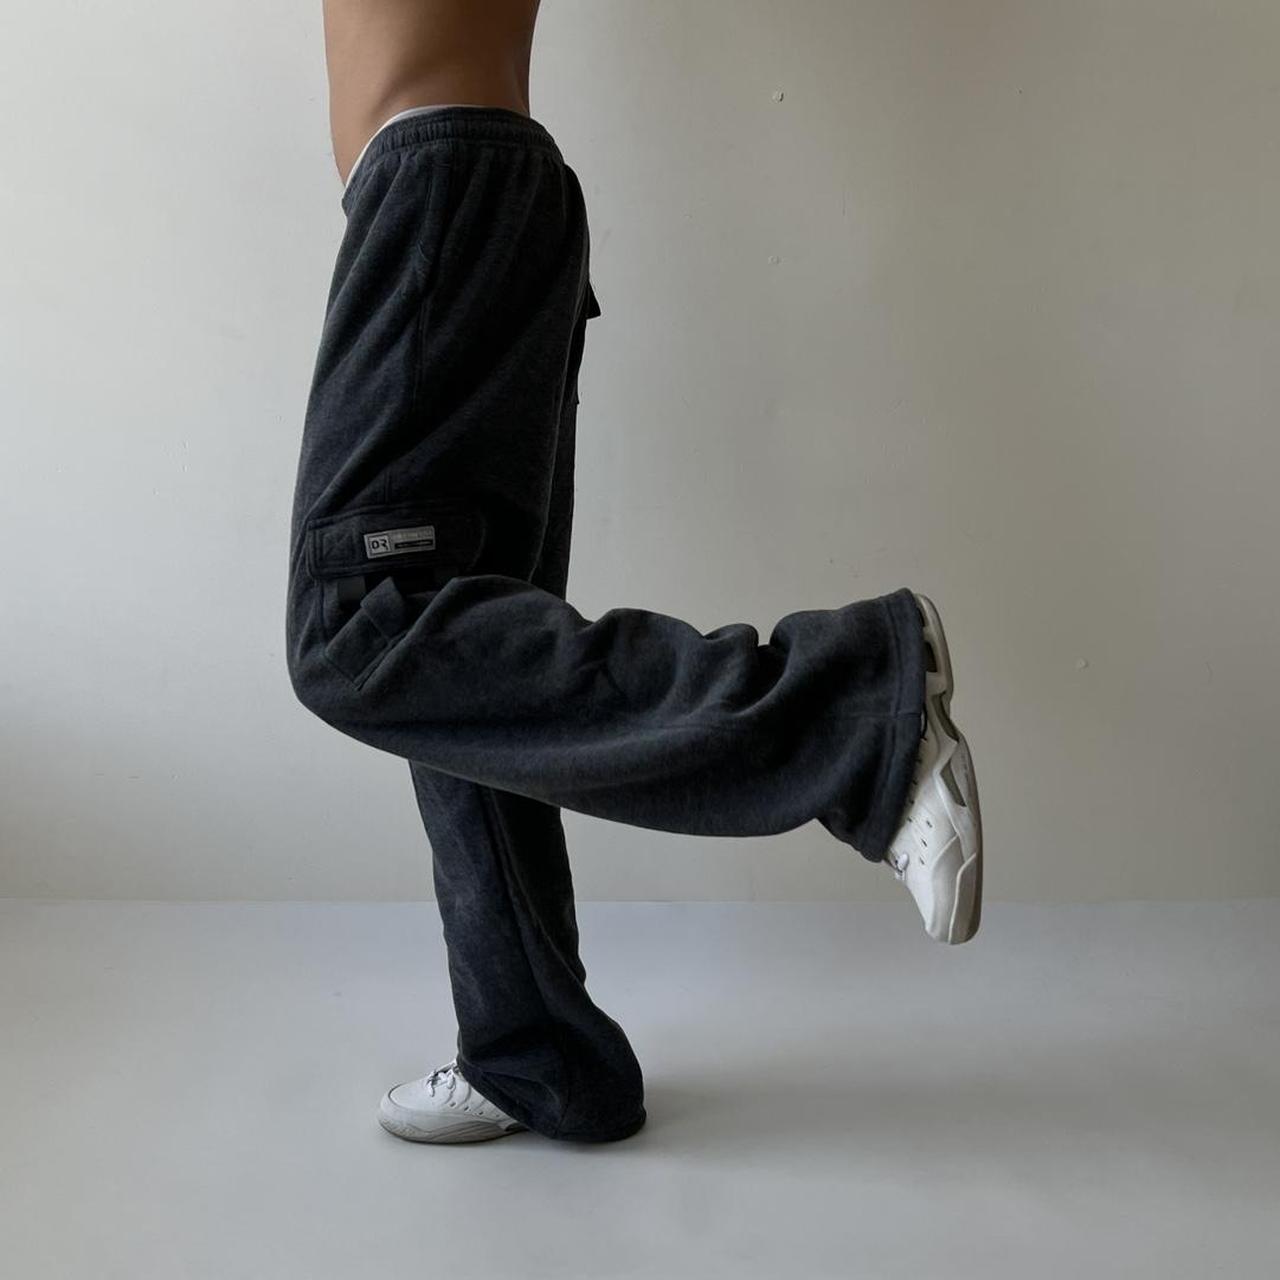 Y2K Black Nike Cargo Sweatpants Waist 30” Length - Depop